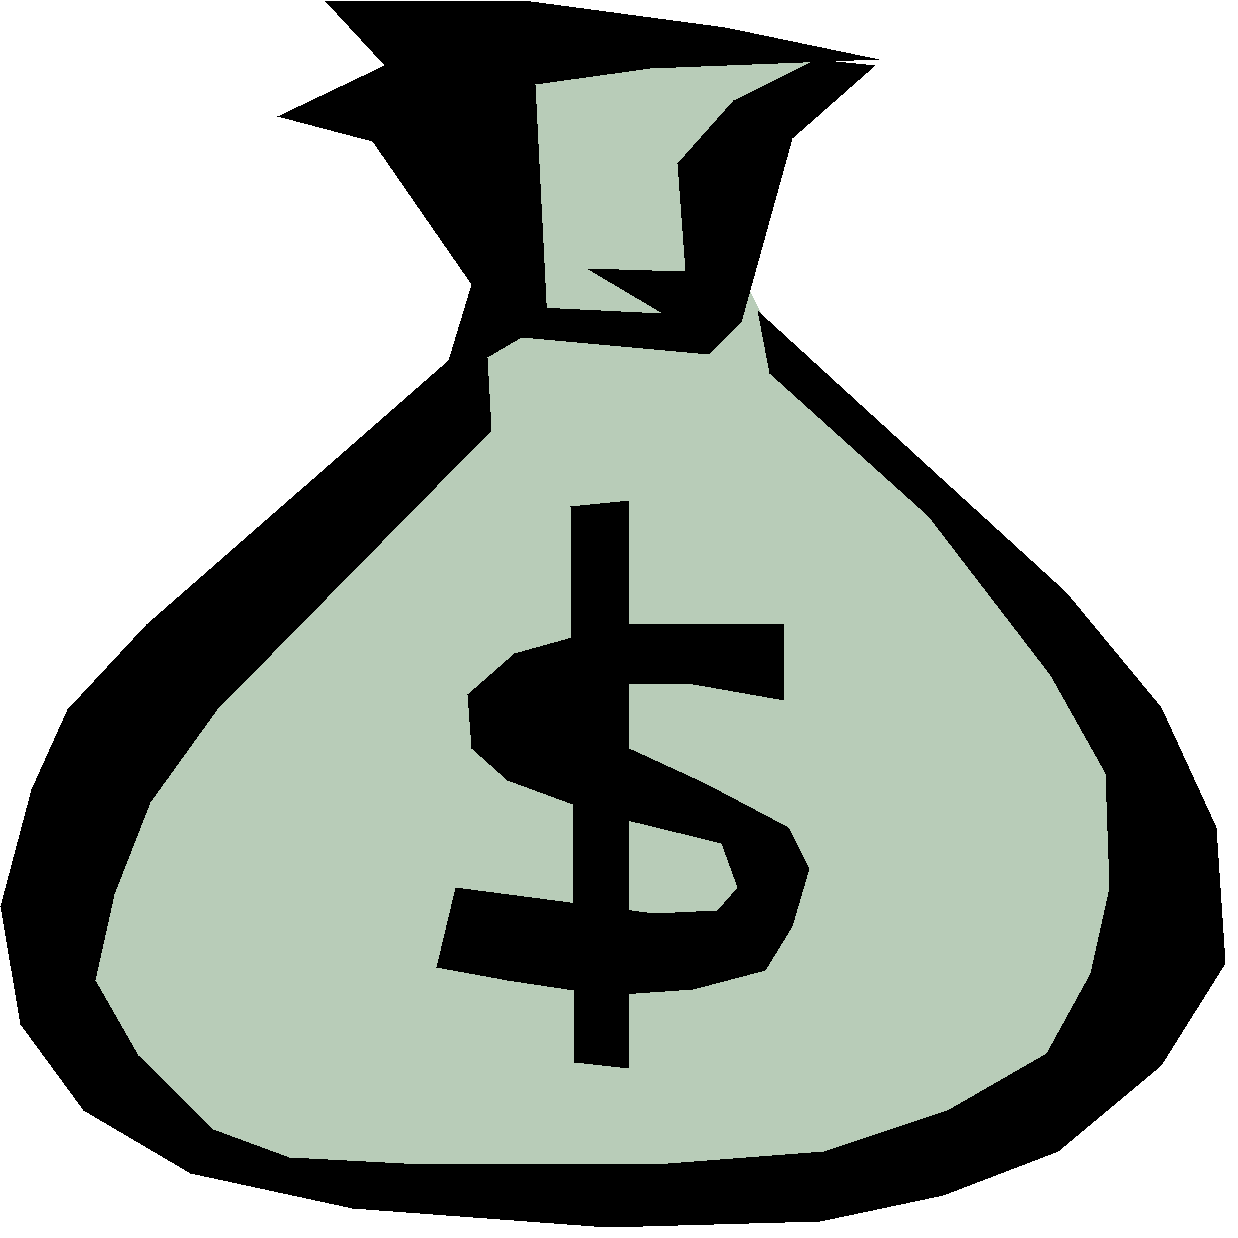 Moneybag illustration